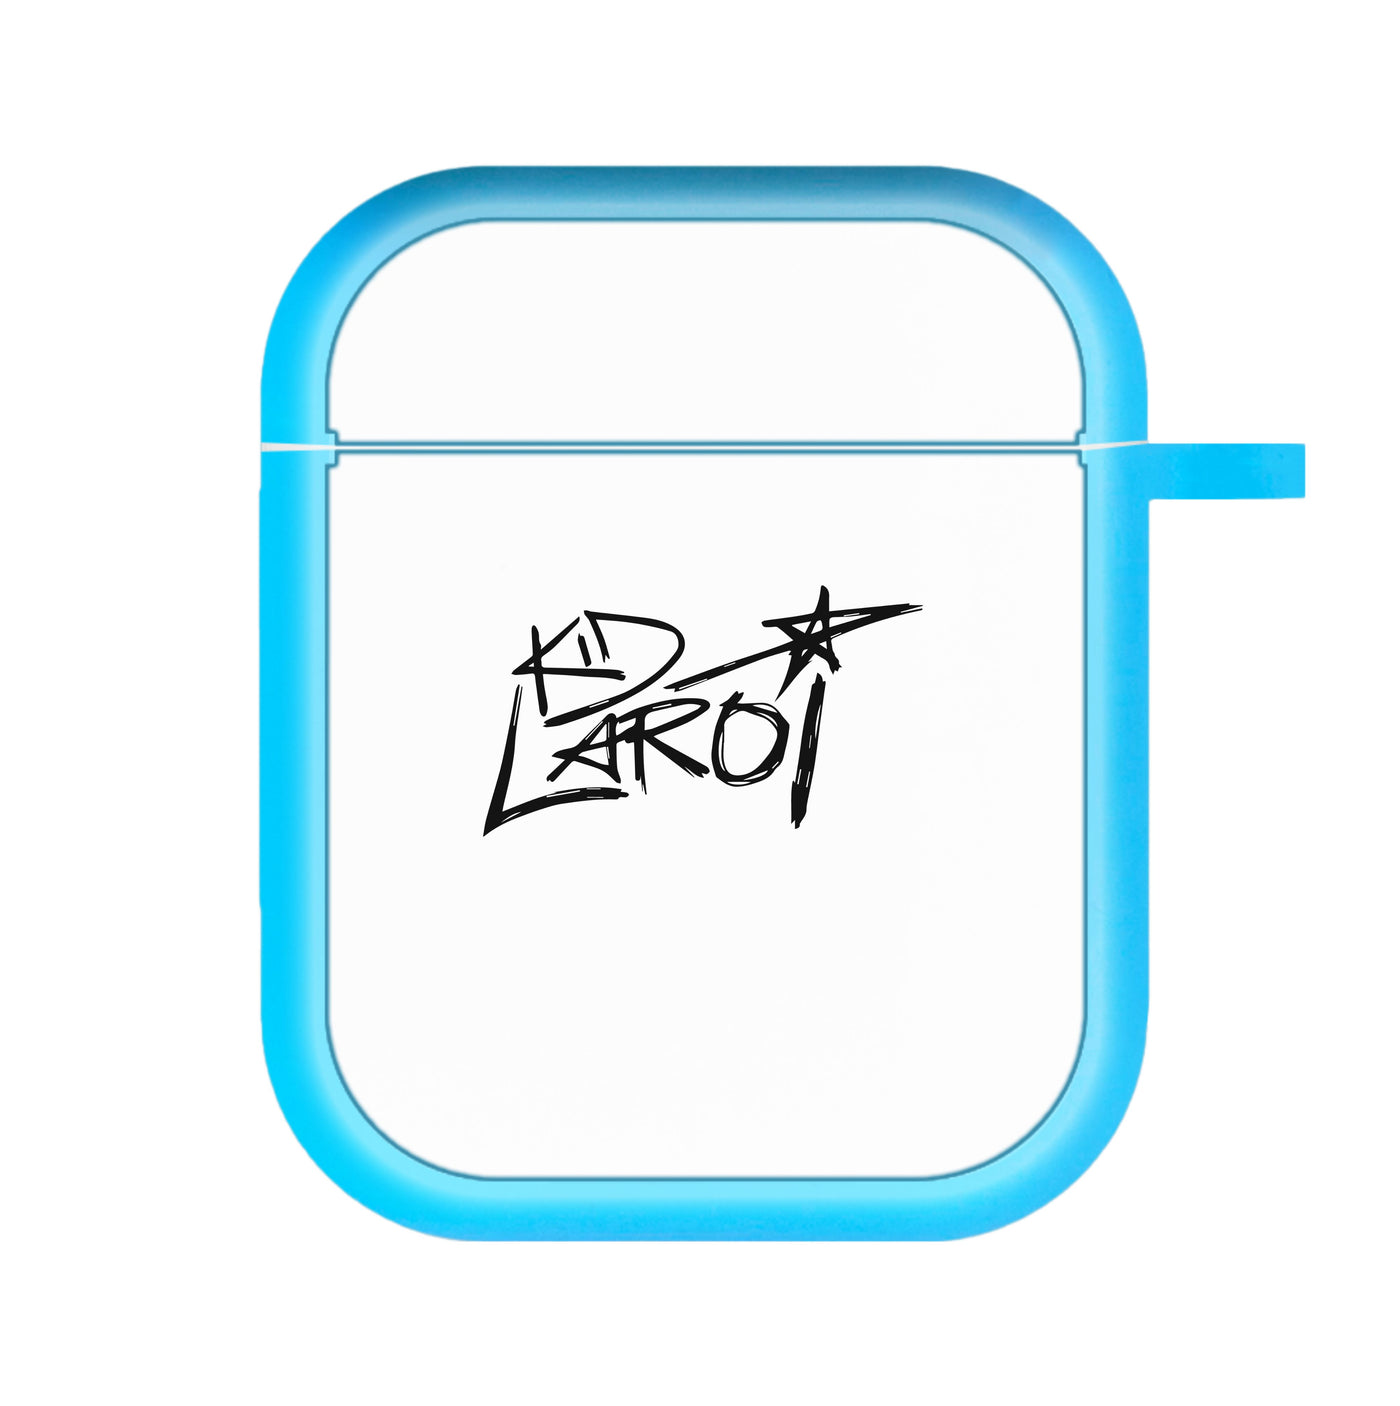 Kid Laroi Sketch  AirPods Case